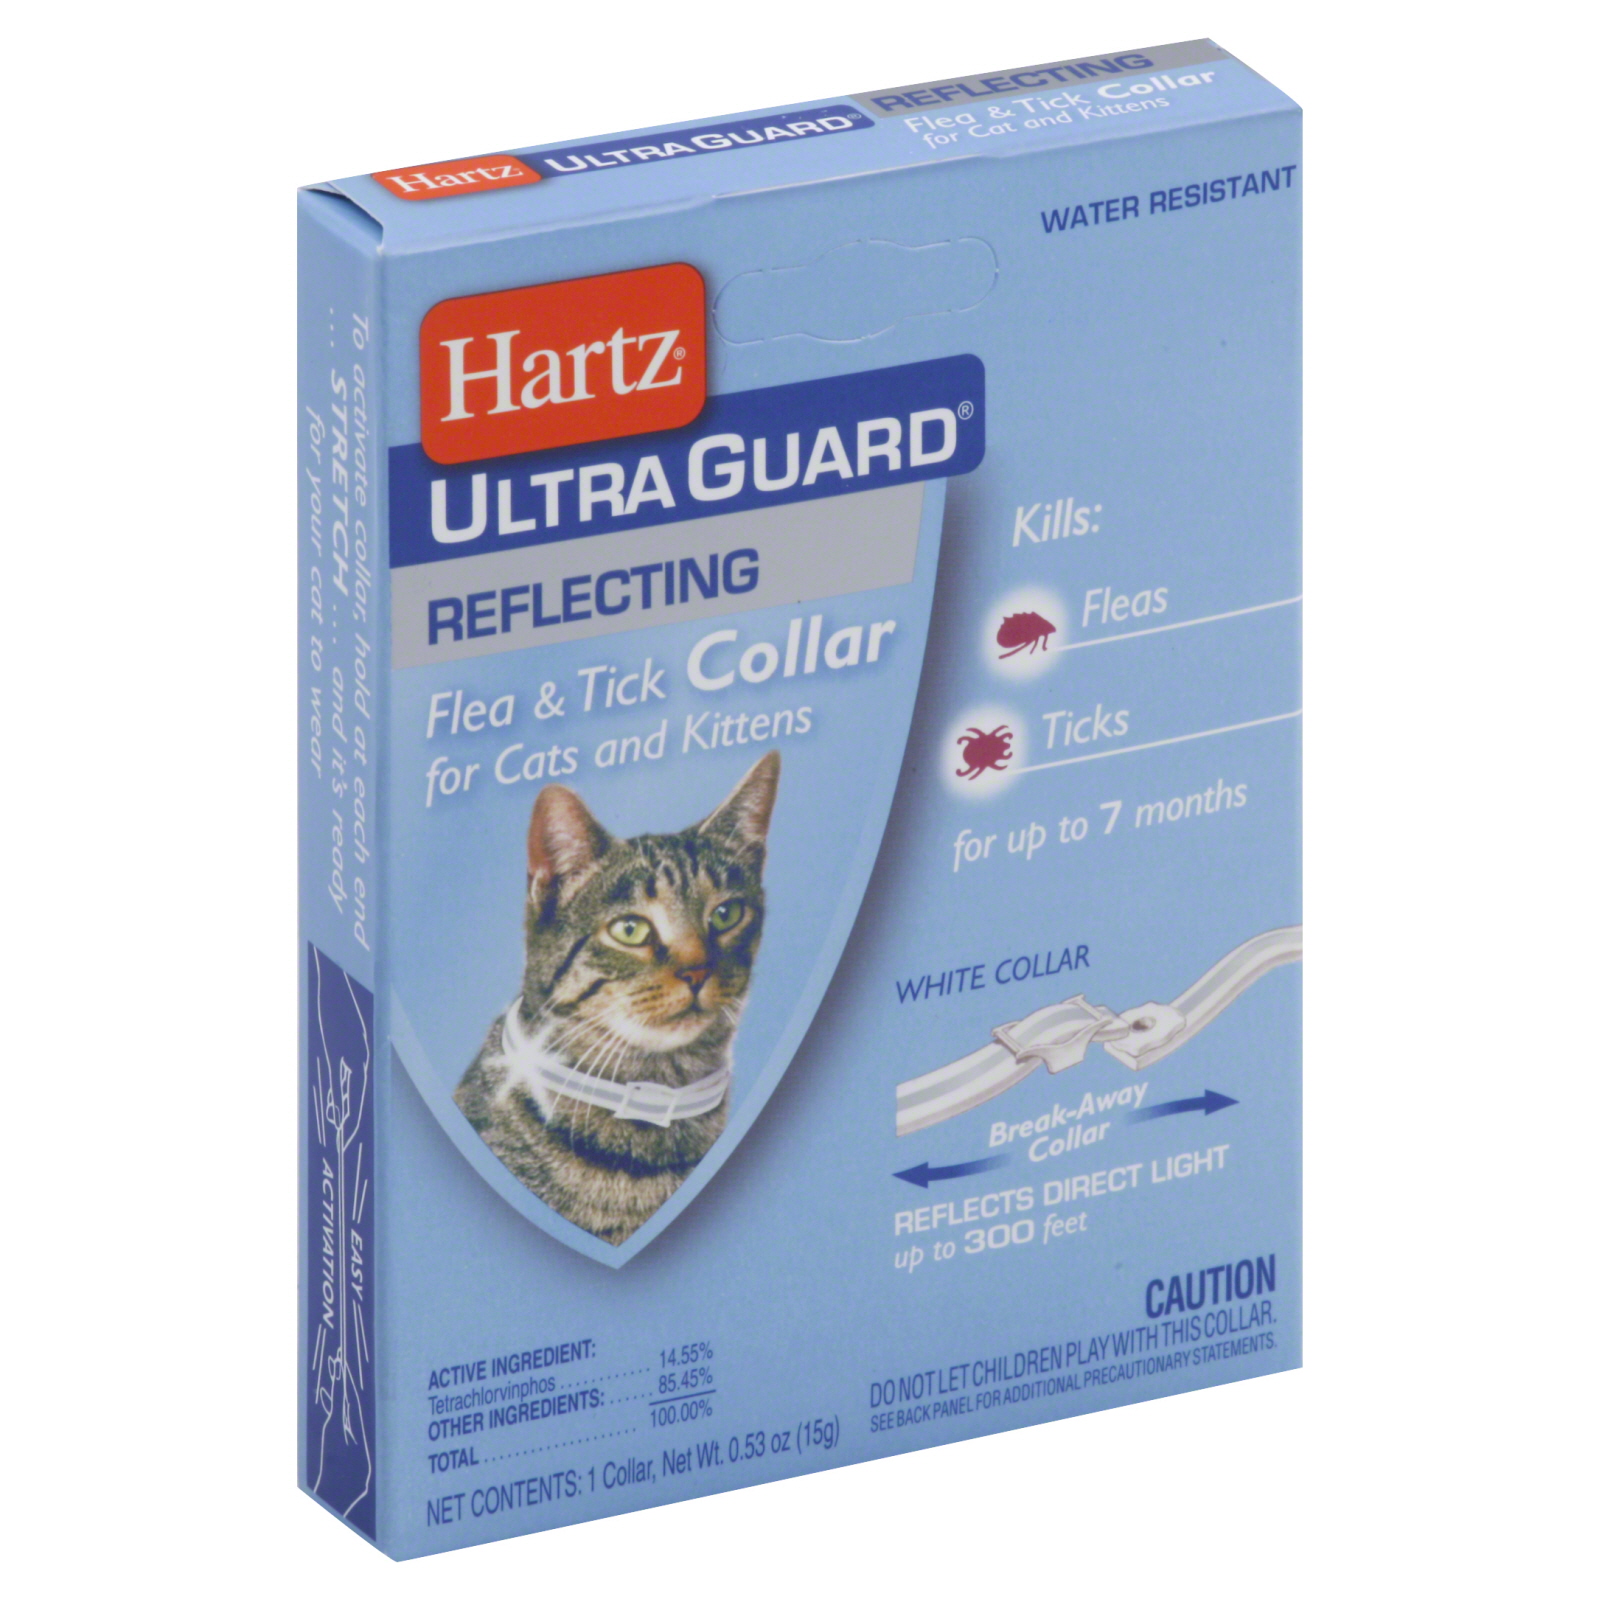 Hartz Ultra Guard Flea & Tick Collar, Reflecting, for Cats and Kittens